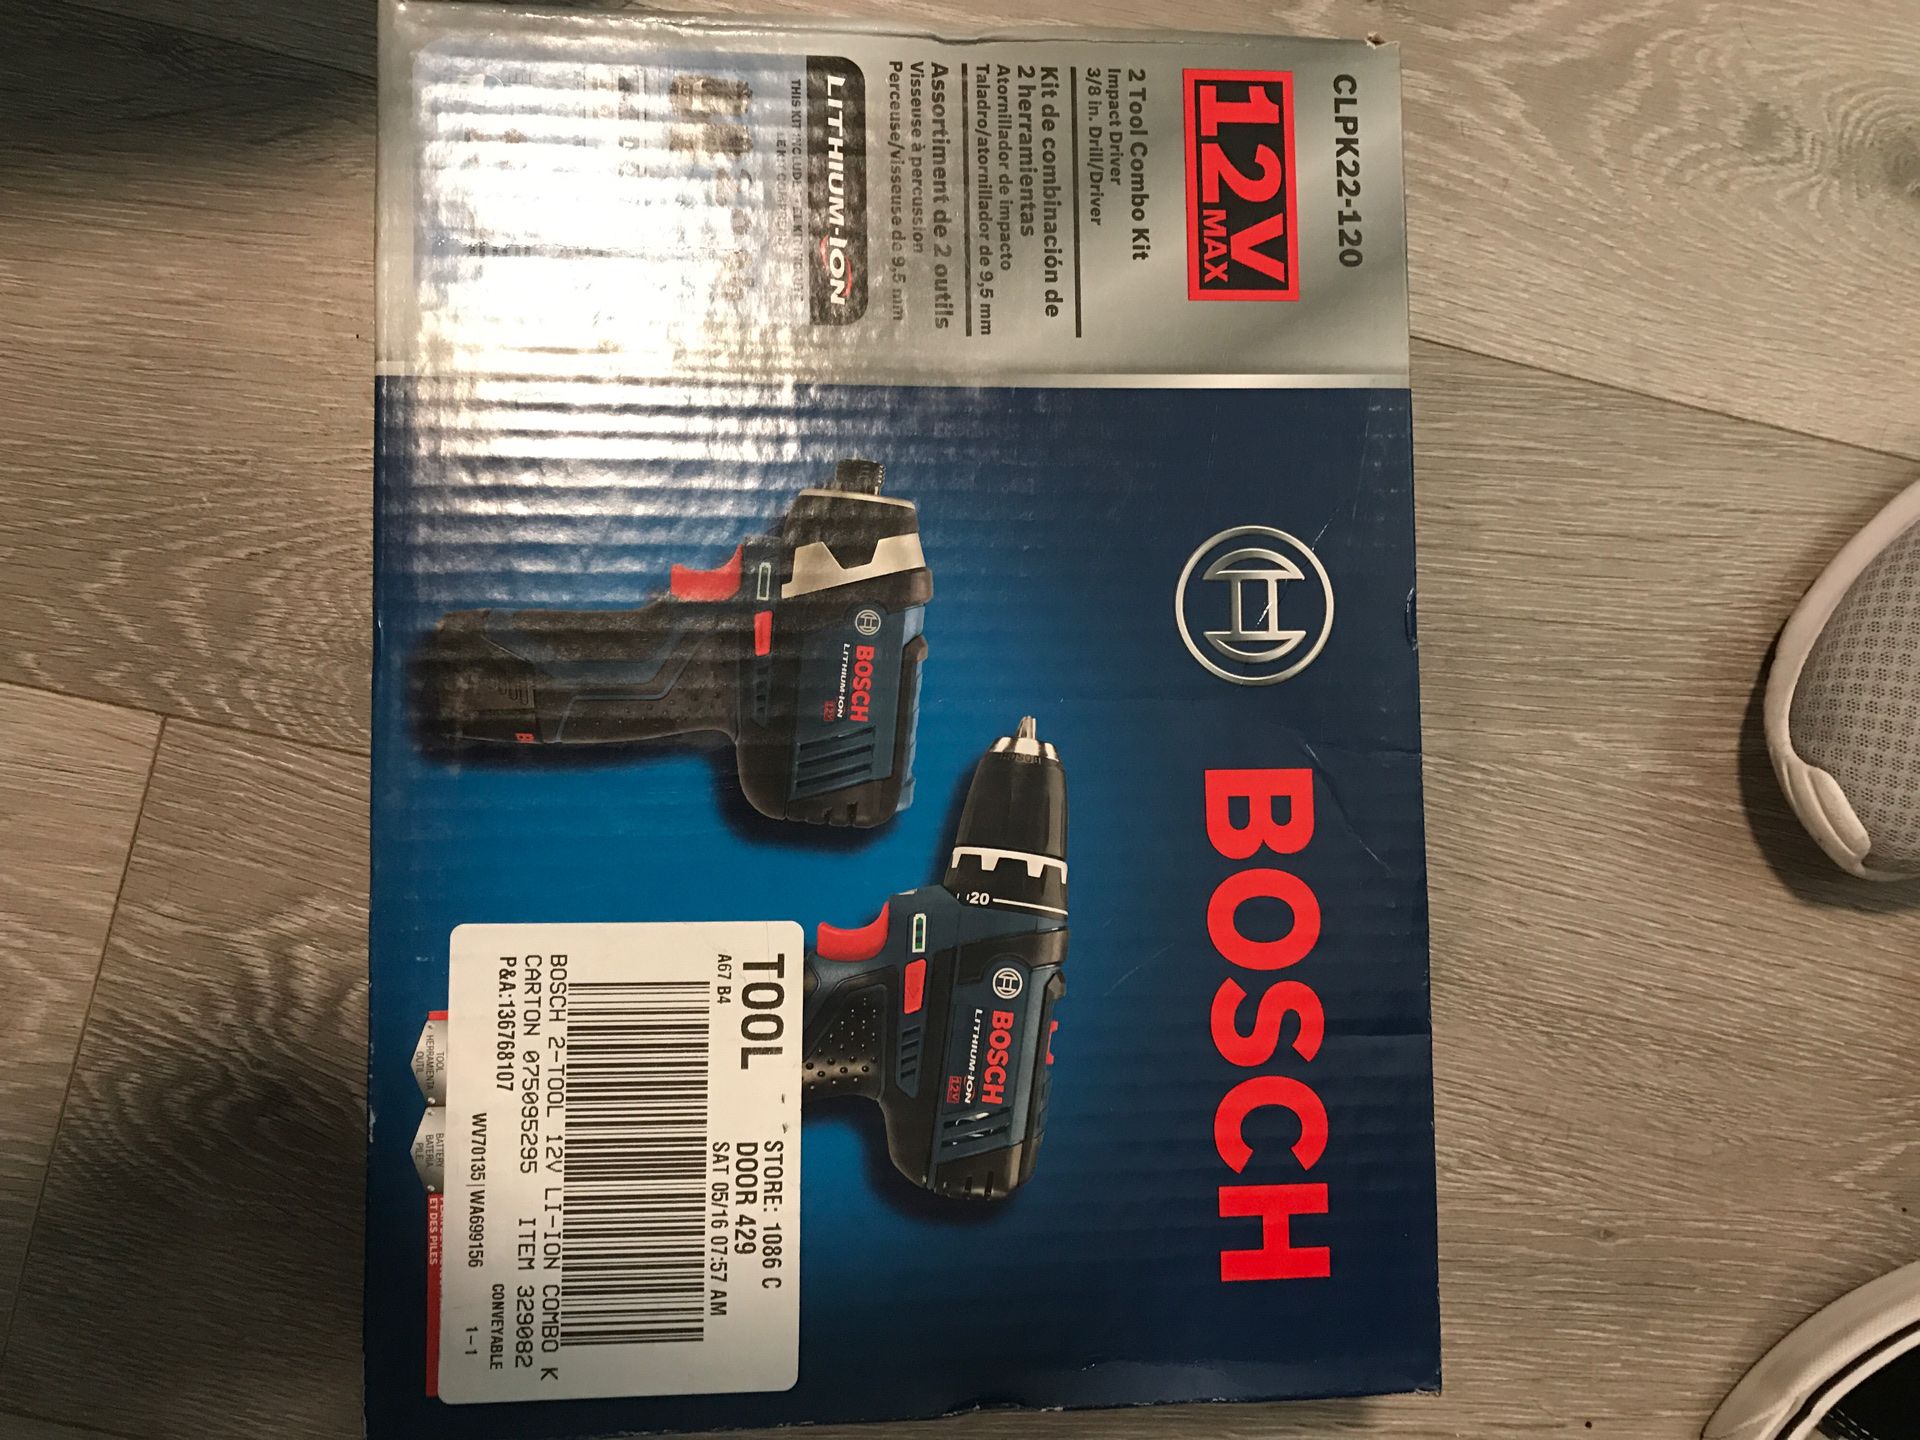 Bosch brand new power tools